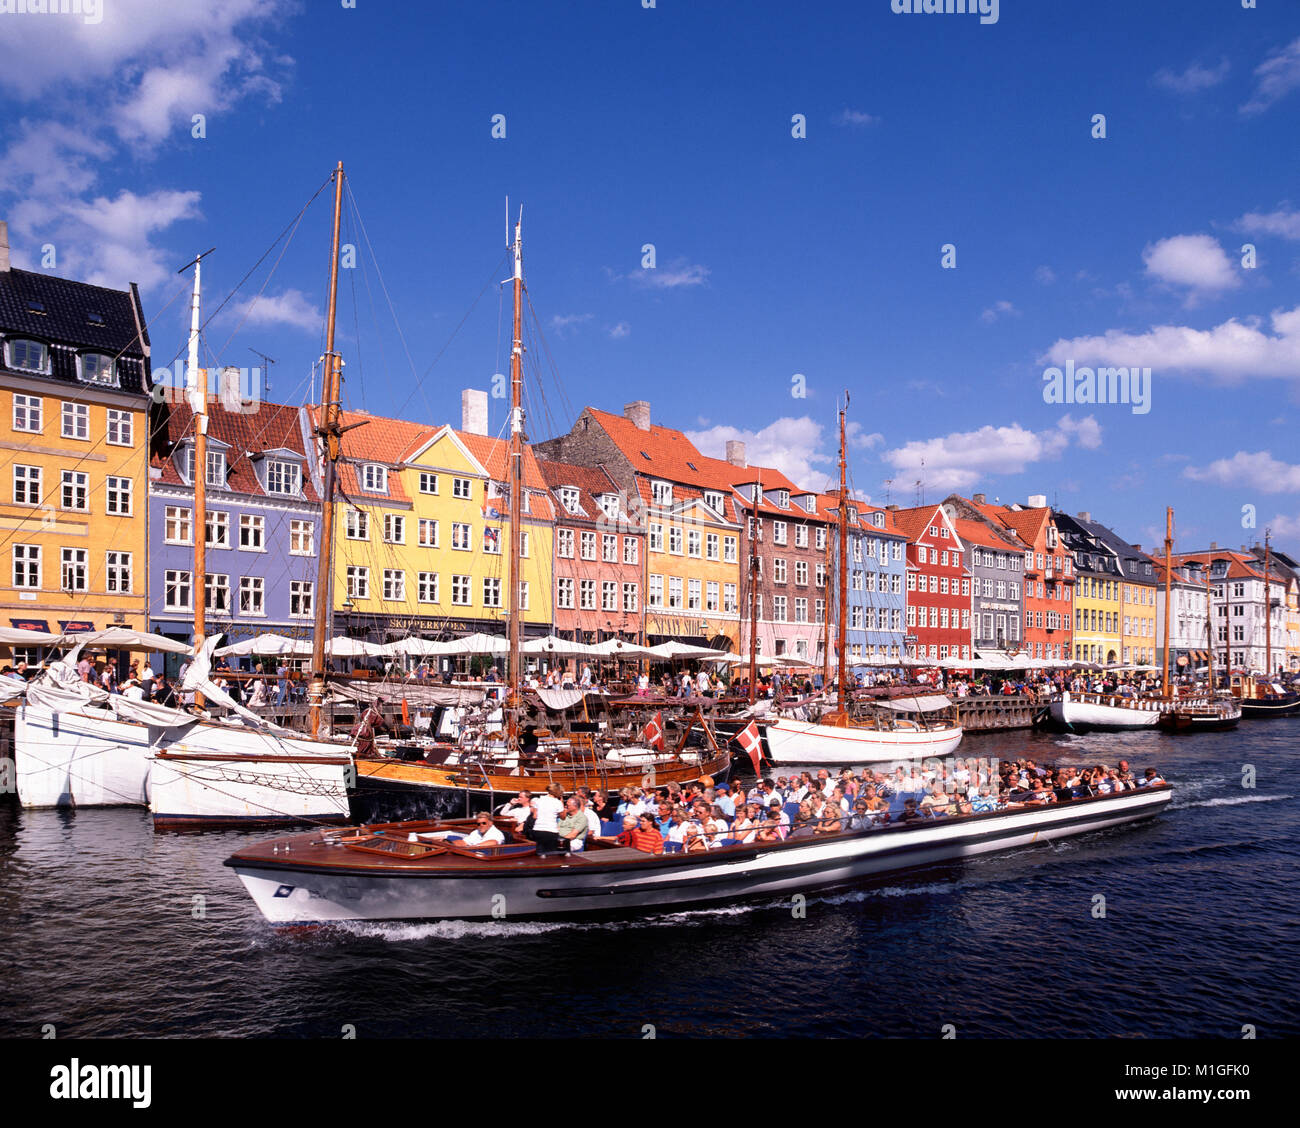 Tourists on pleasure boat, Nyhavn, Copenhagen, Denmark. Stock Photo